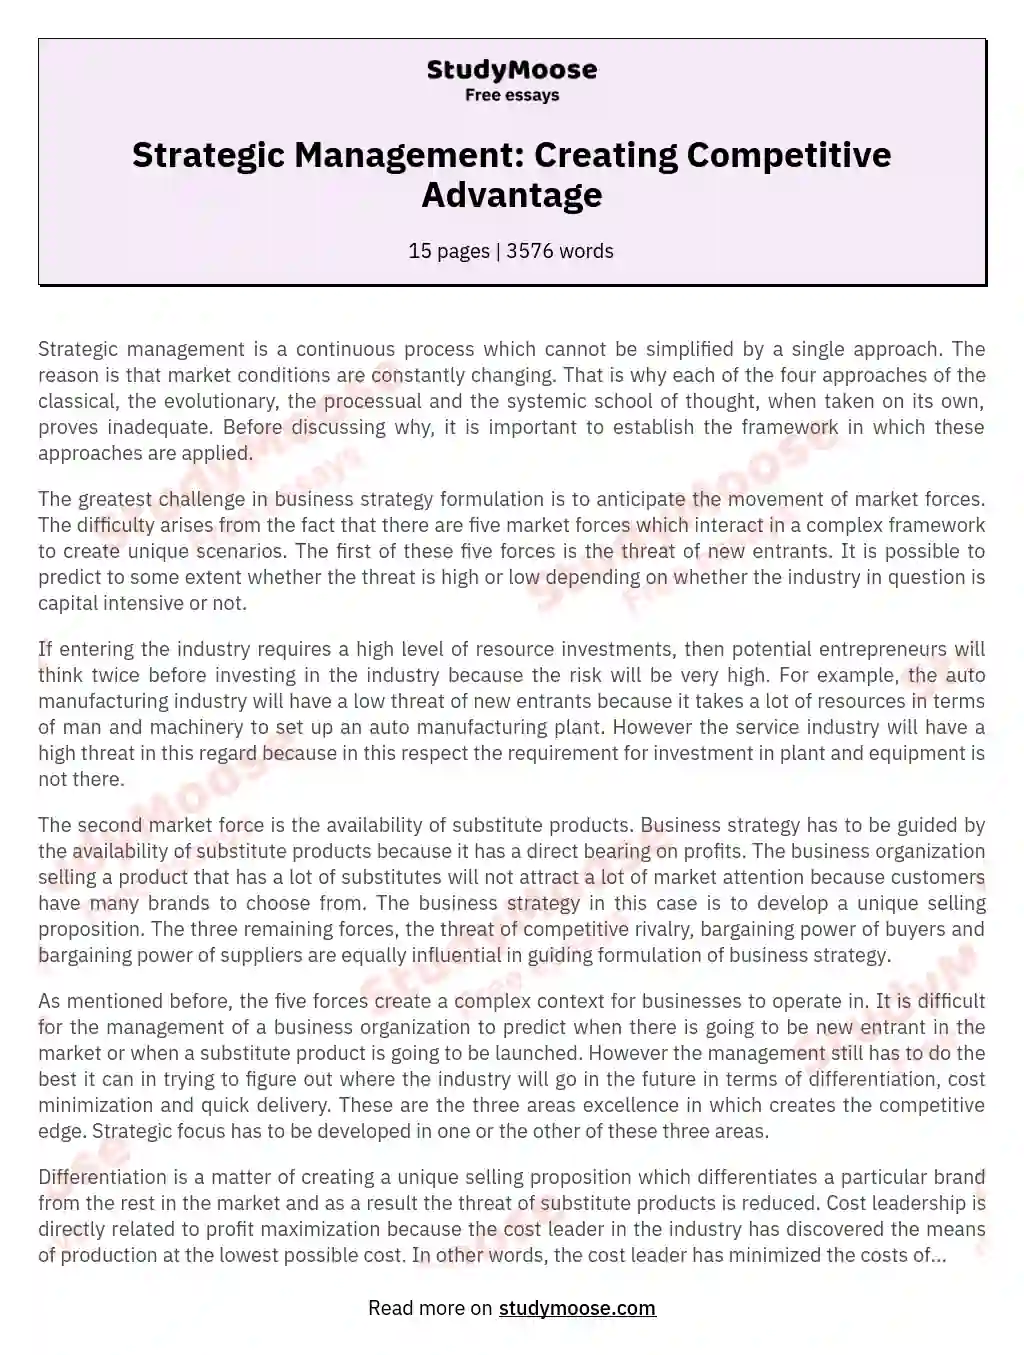 conclusion of strategic management essay